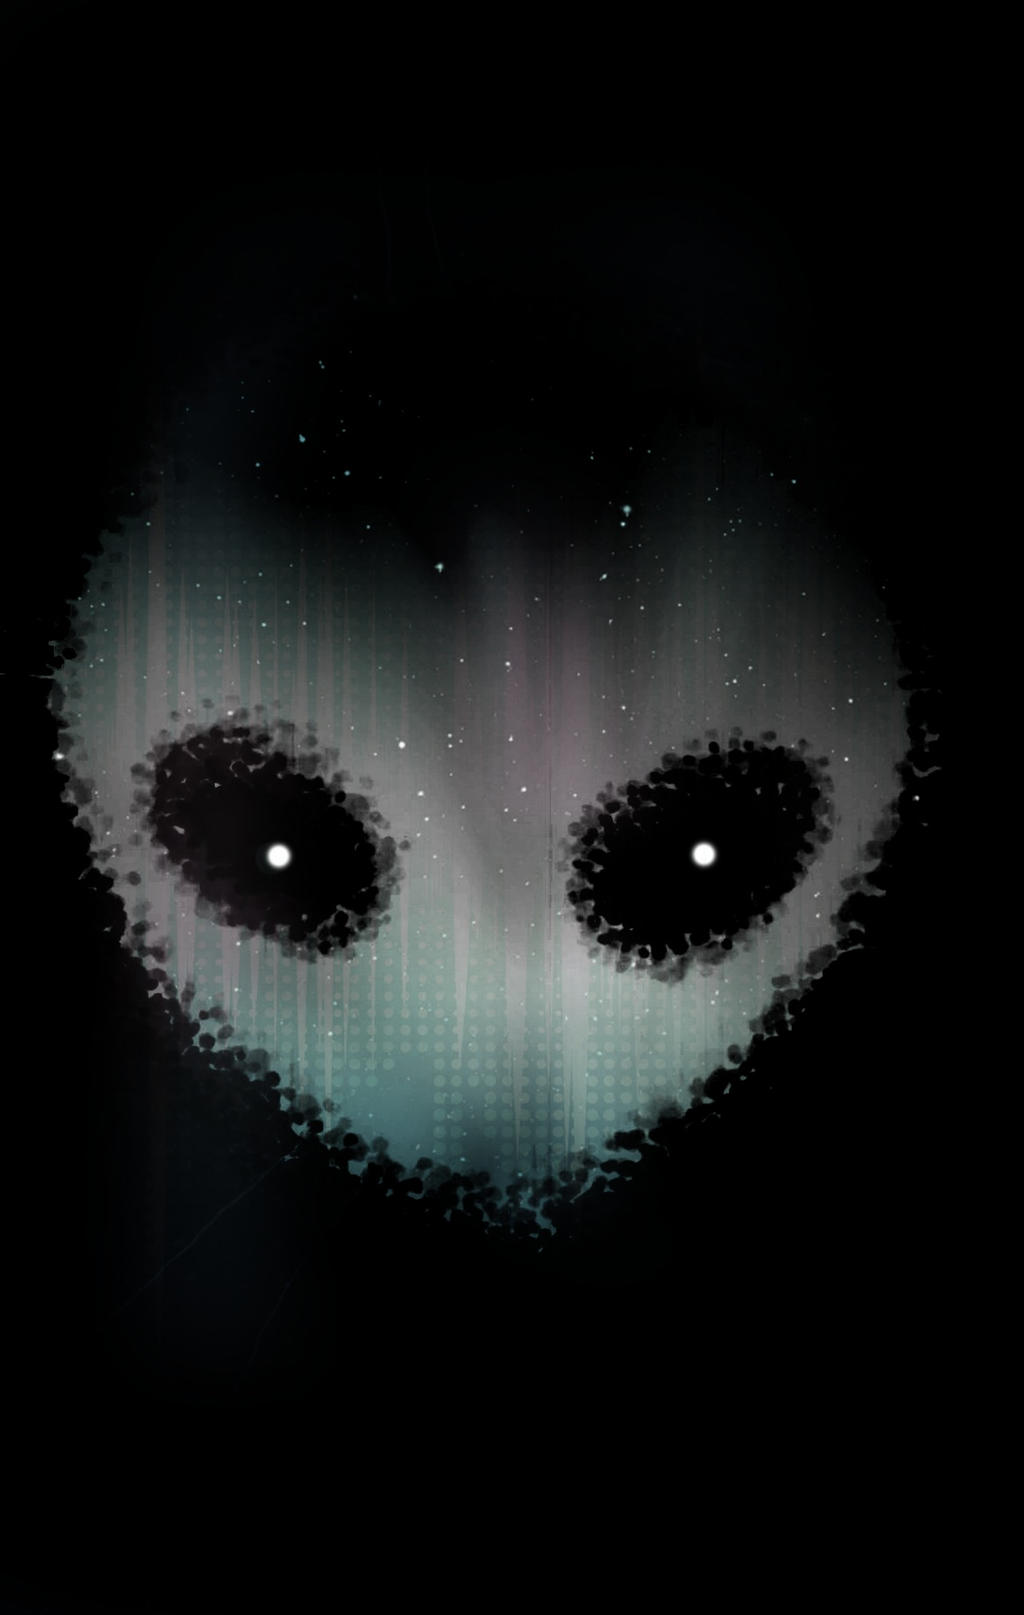 Alien - PicMonkey Remix (cut for iPhone wallpaper)